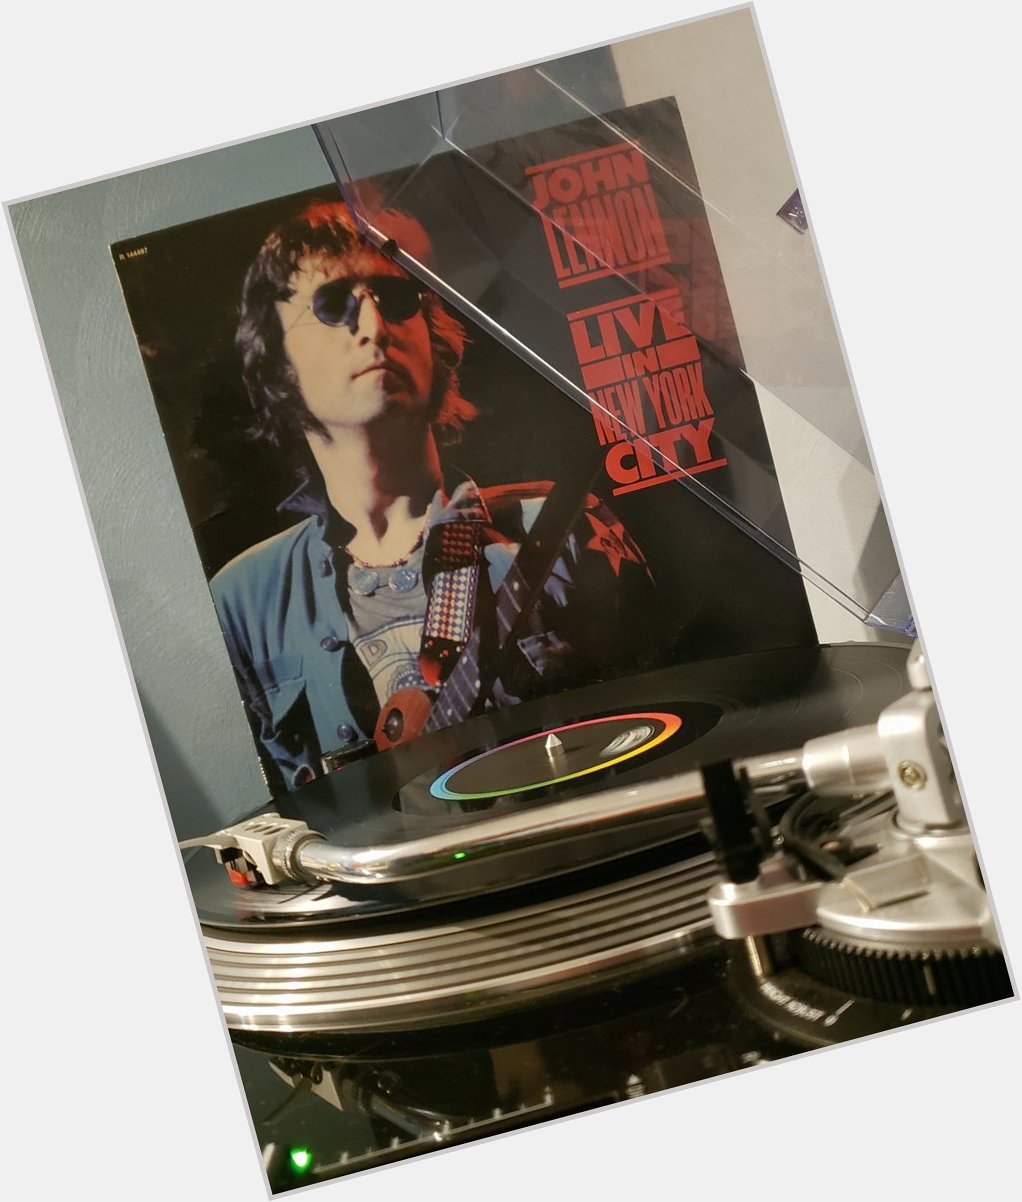 John Lennon - Live in New York City (1986).
Happy birthday, John.   